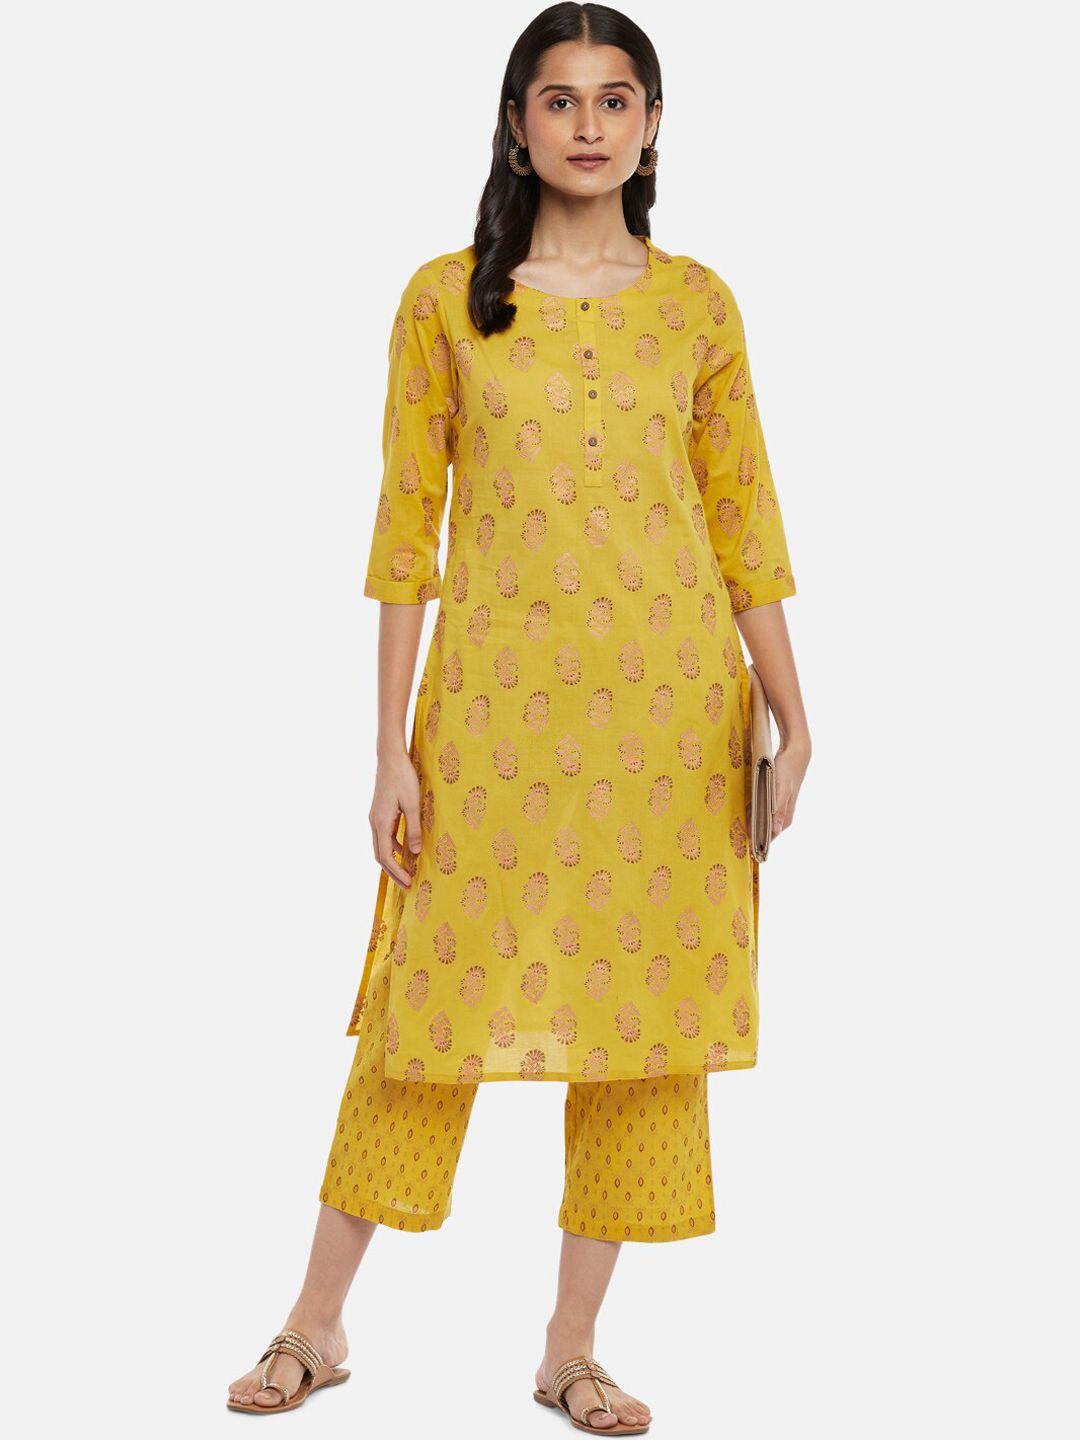 rangmanch-by-pantaloons-women-yellow-printed-pure-cotton-kurti-with-trousers